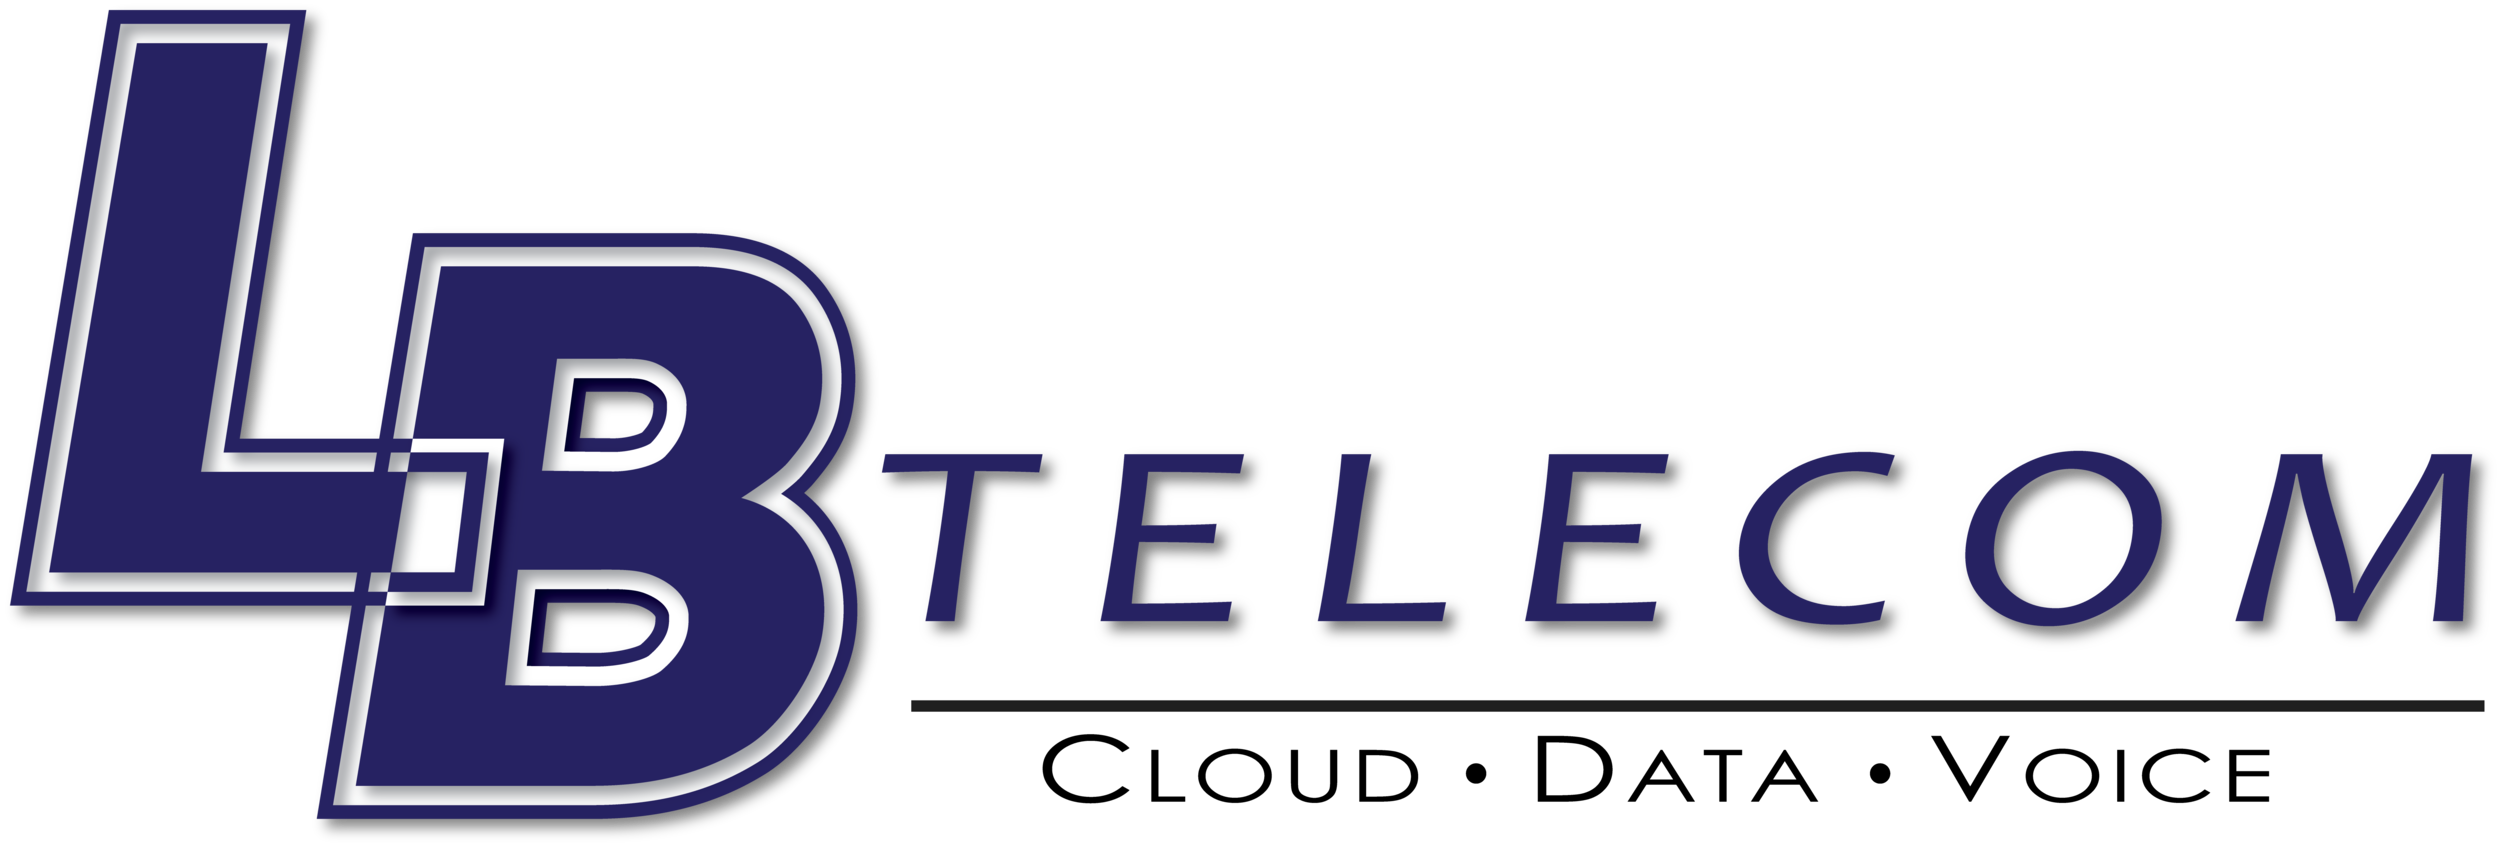 LB Telecom Logo - NEW No background.png